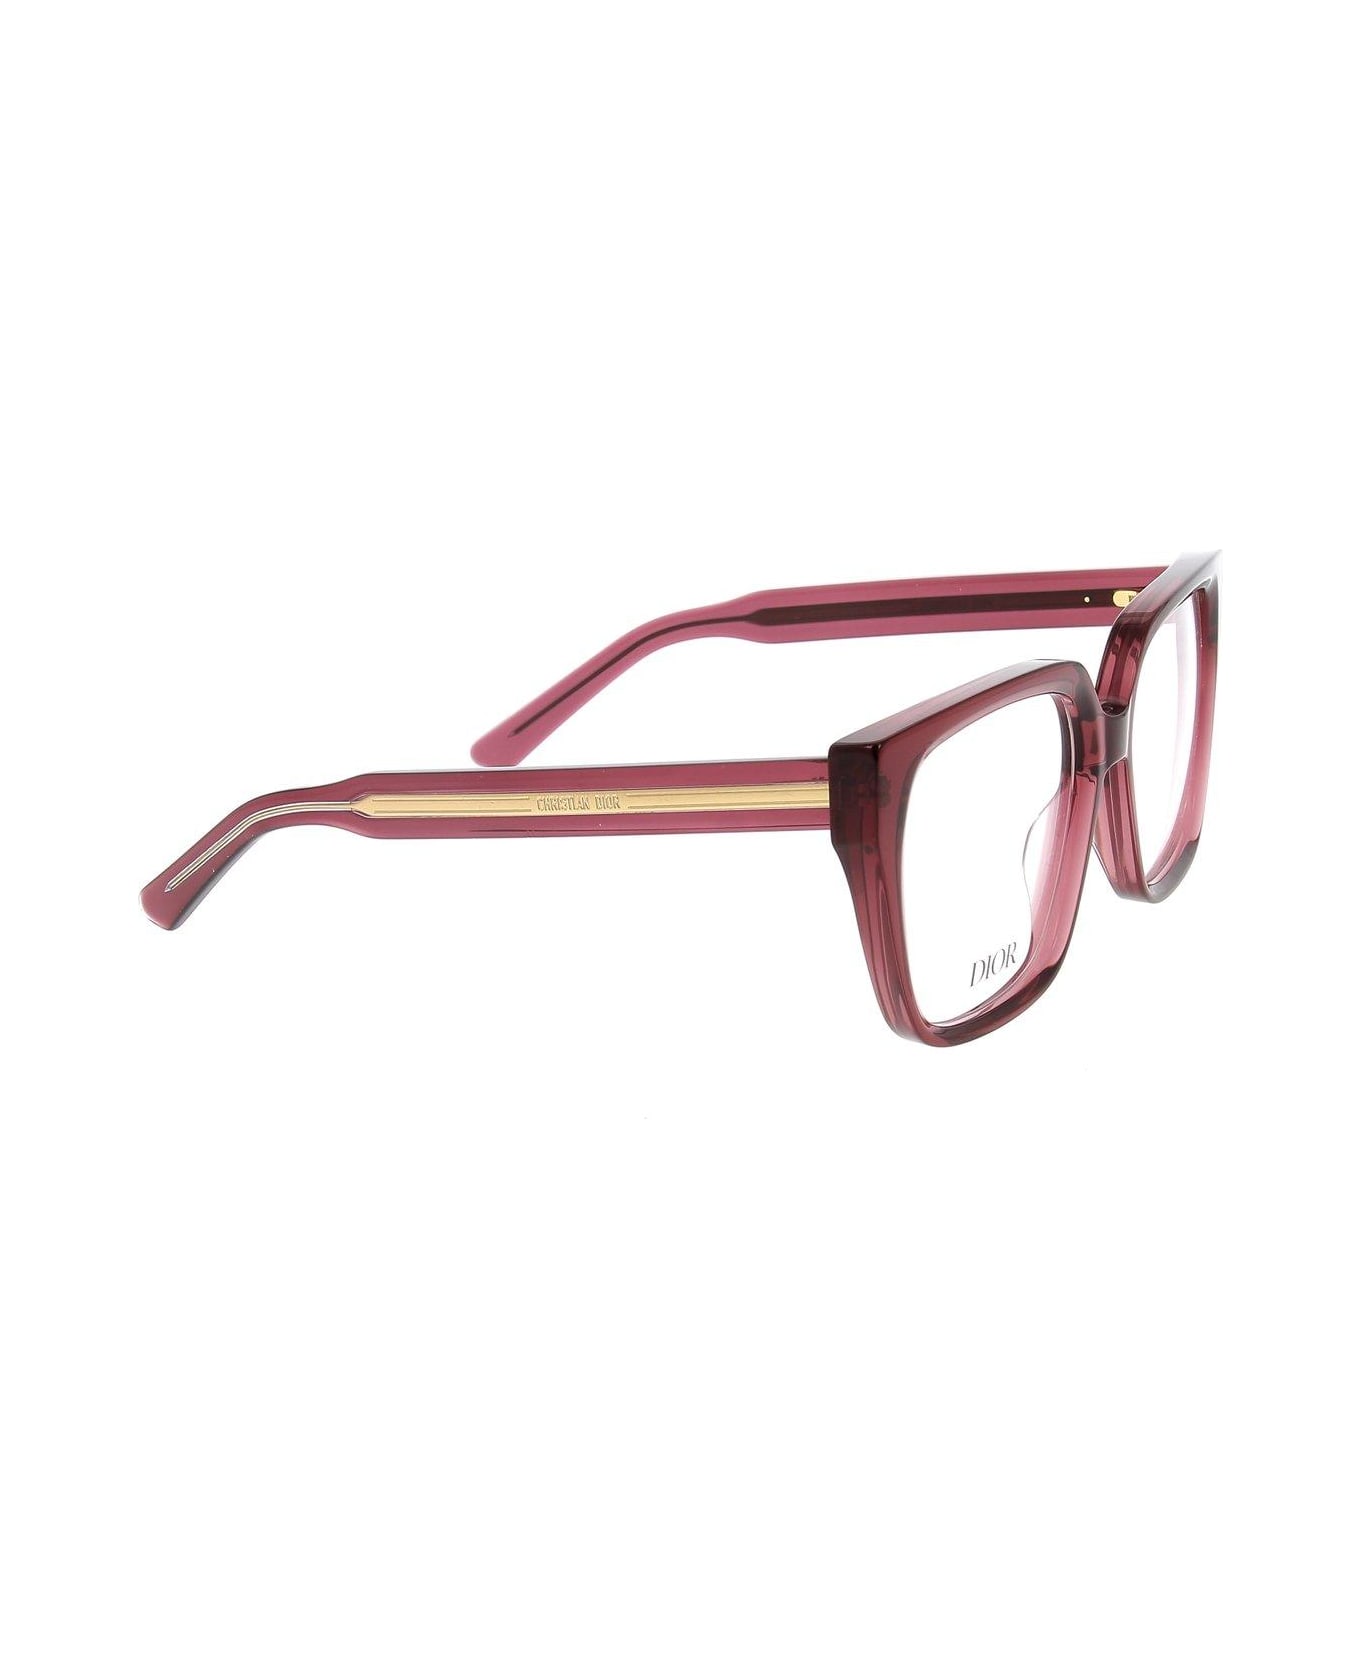 Dior Eyewear Butterfly Frame Glasses - 3500 アイウェア